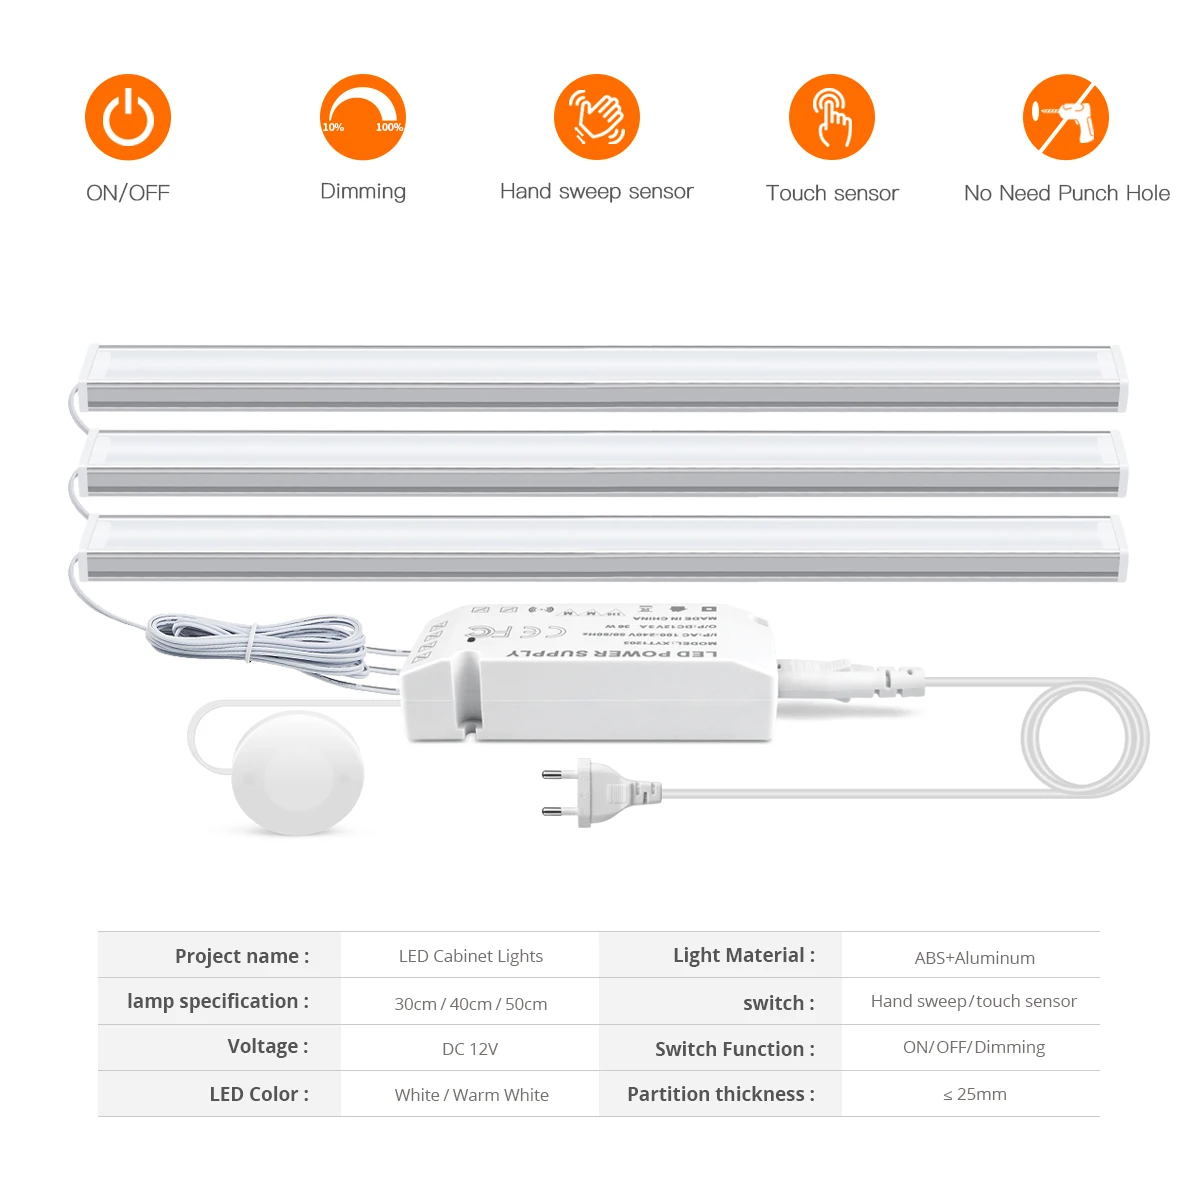 LED alluminio Hand Sweep Sensor interruttore tattile penetrabile luci a LED dimmerabili in legno Bar armadio da cucina armadio lampada da notte per armadio